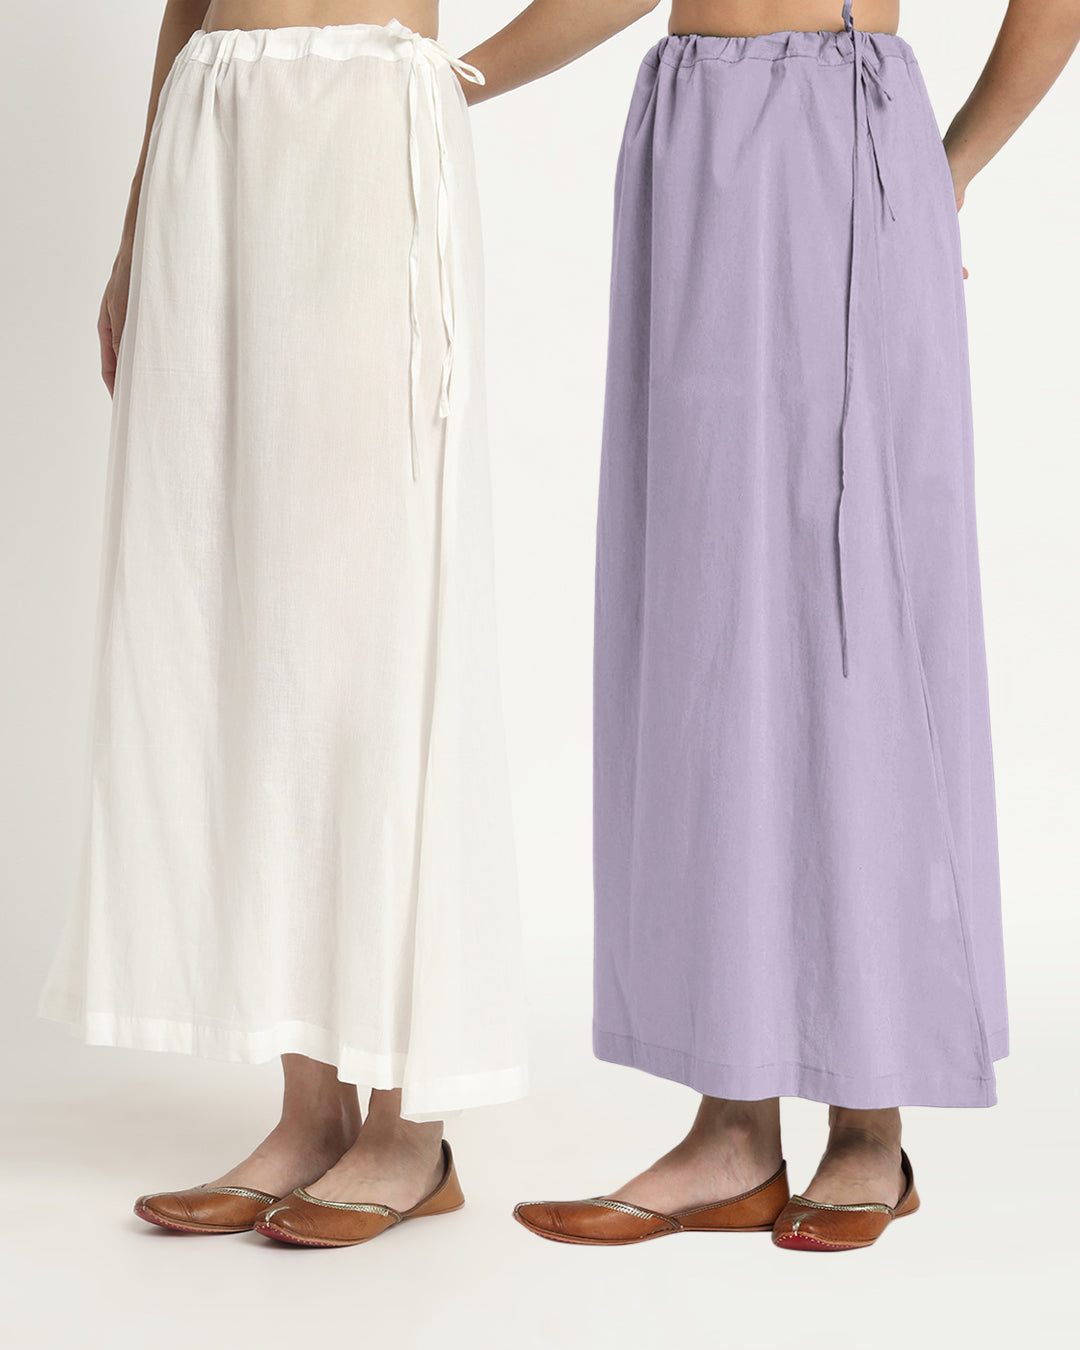 Combo: Pristine White & Lilac Peekaboo Petticoat- Set of 2